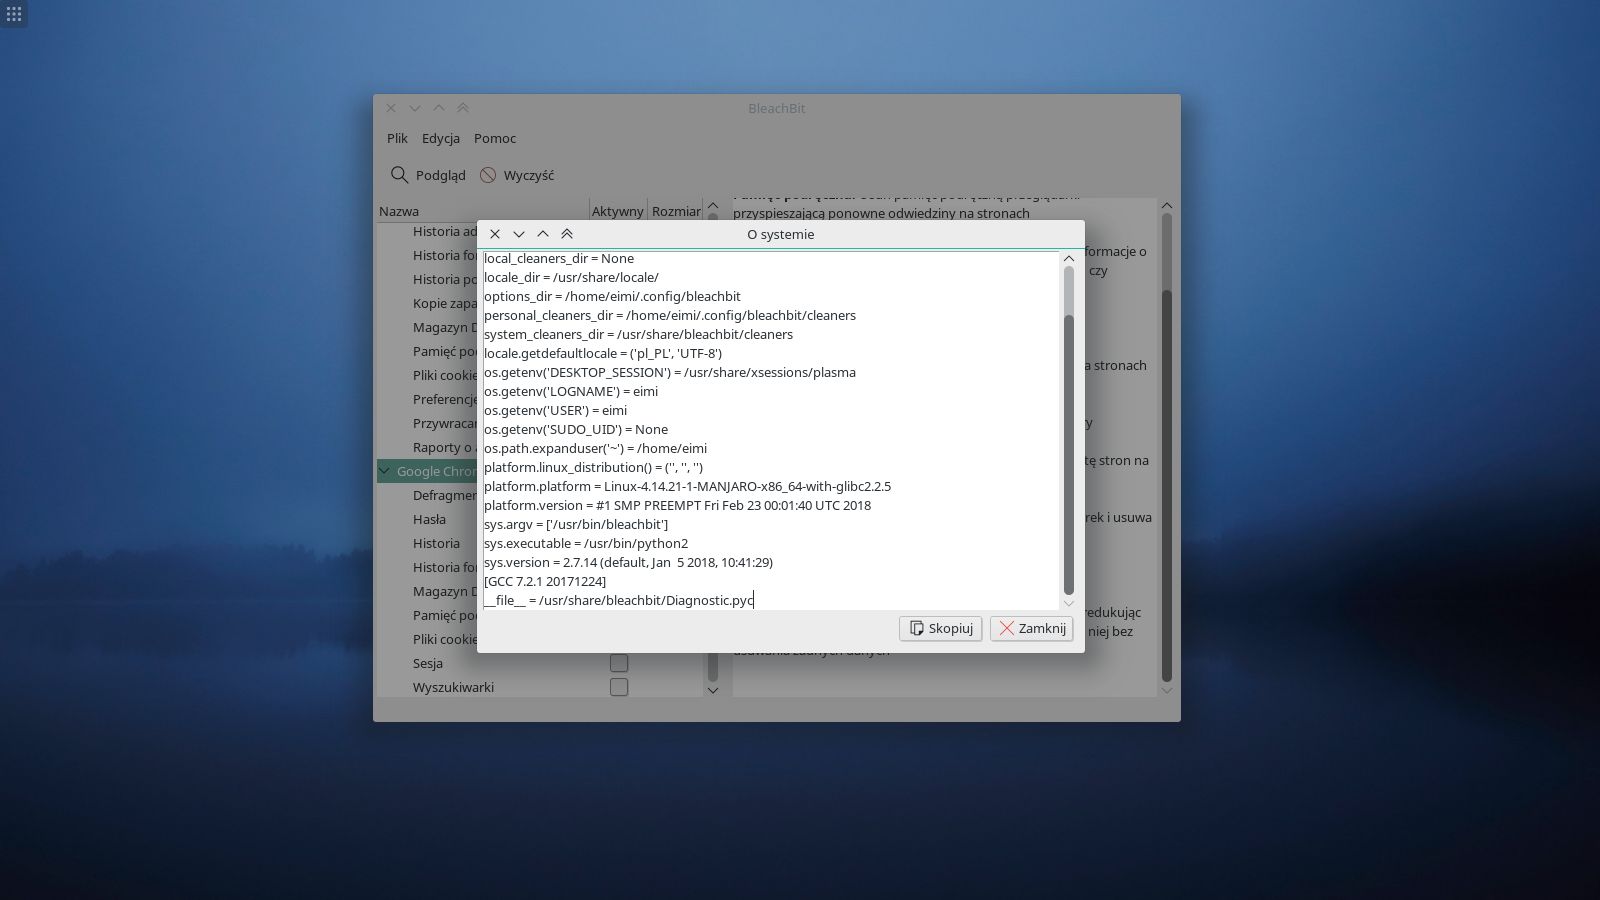 BleachBit 4.6.0 for mac download